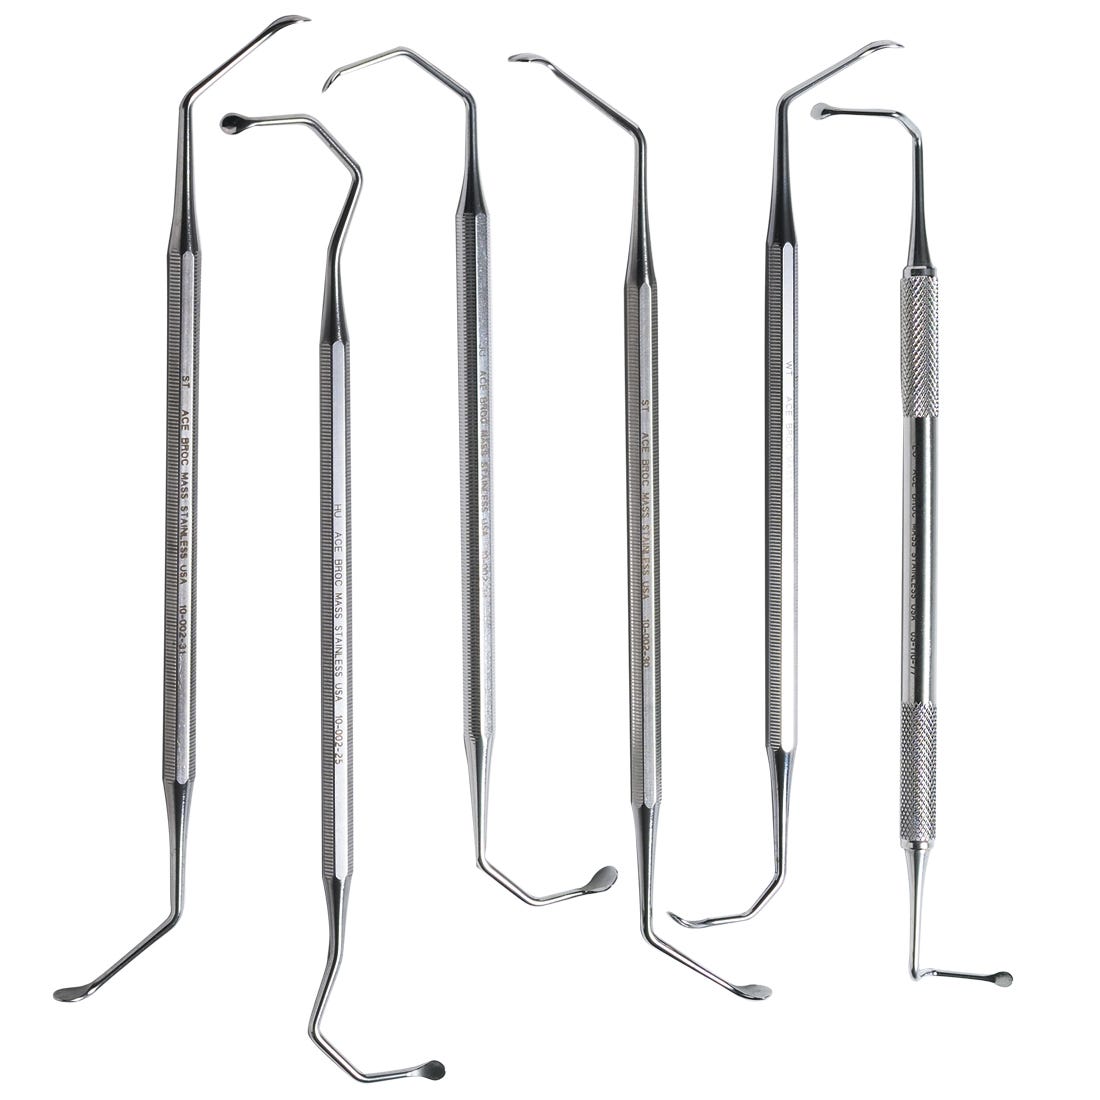 ACE Antralplasty Elevator Kit for Sinus and Socket Lift Procedures, set of 6 instruments